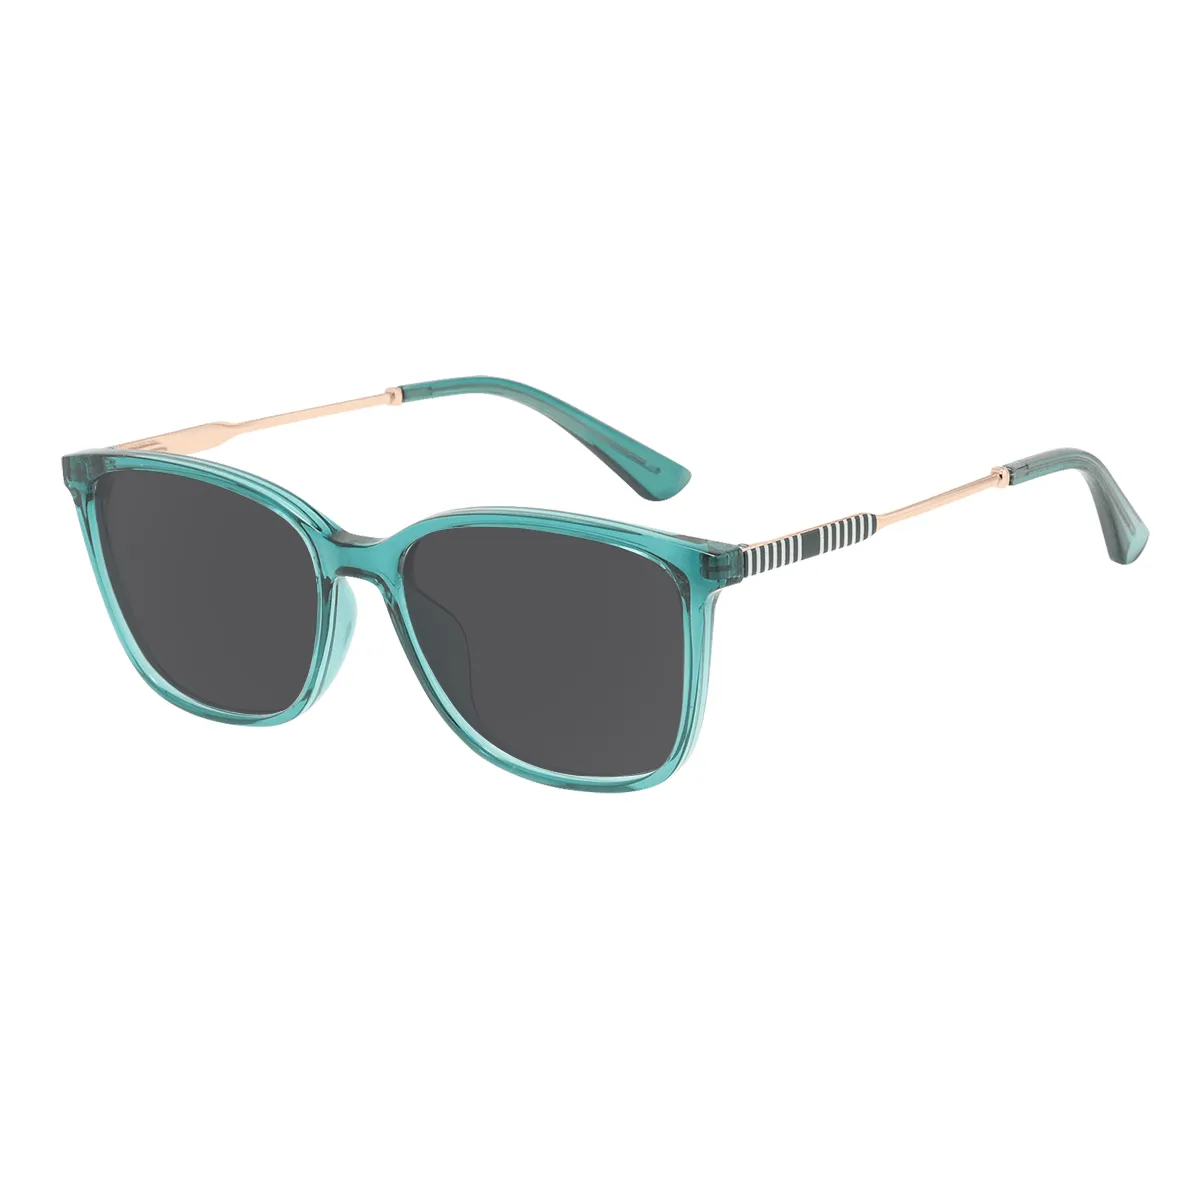 Adcock - Square Green Sunglasses for Men & Women